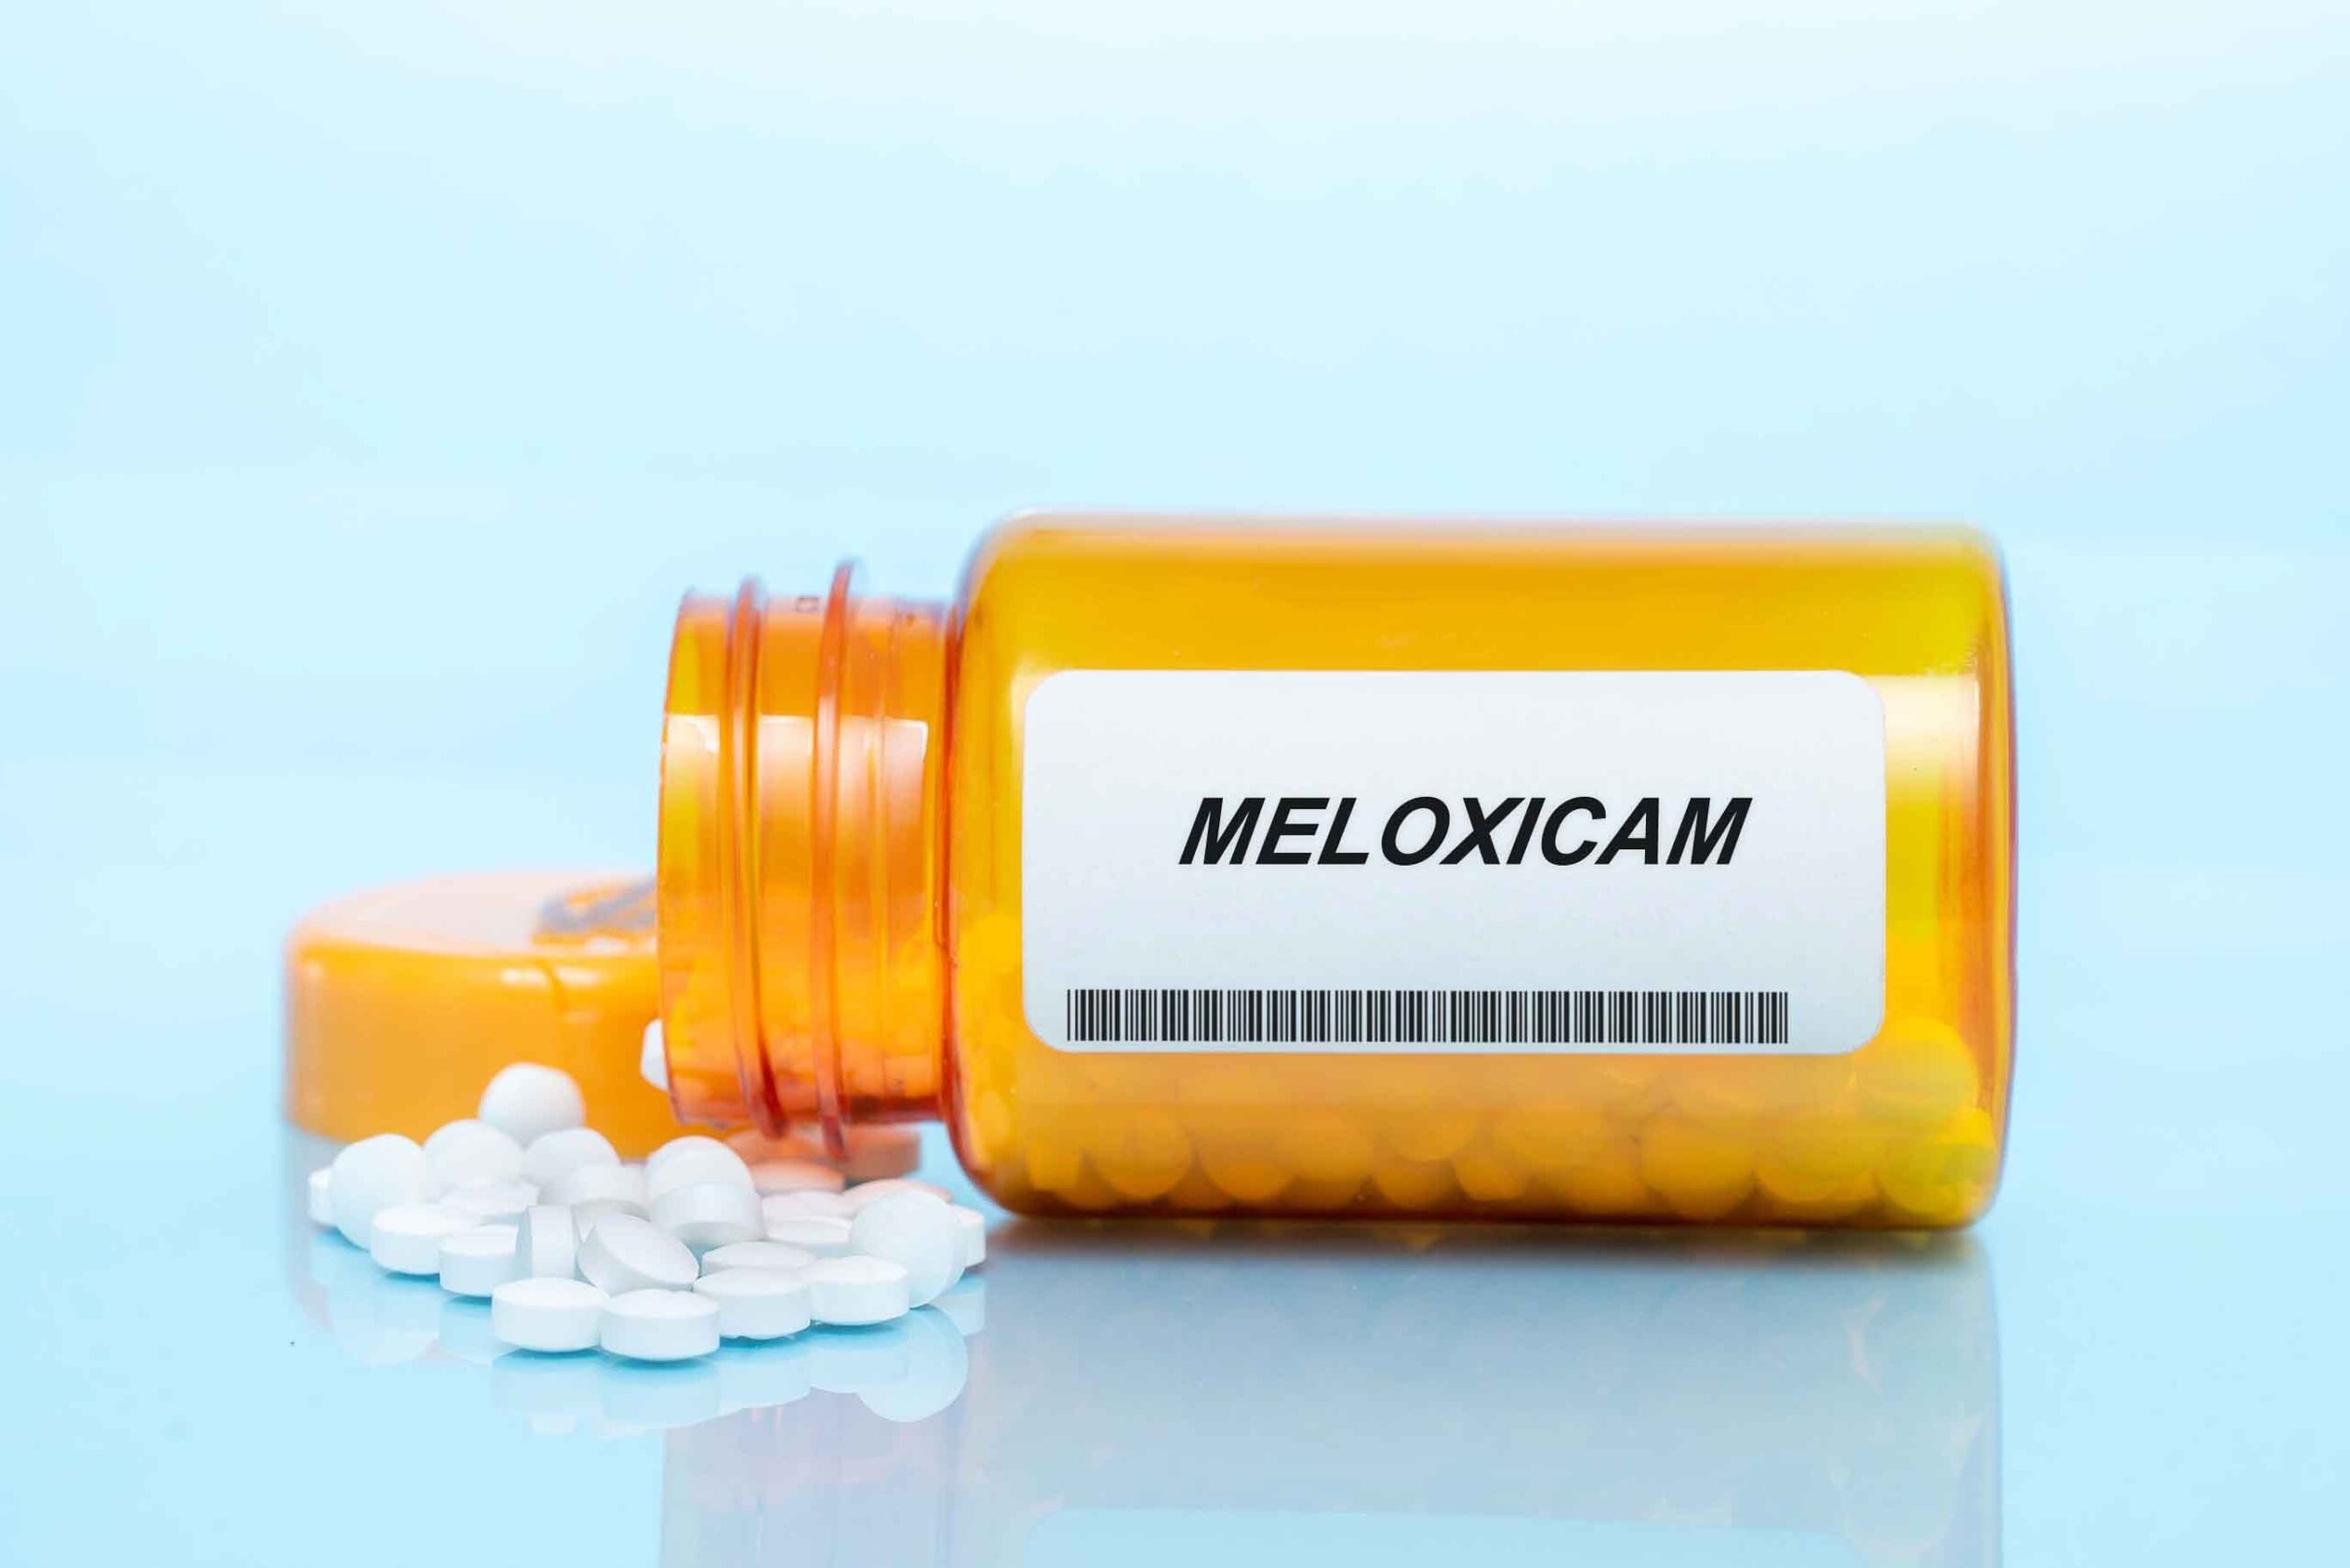 Is Meloxicam Addictive?